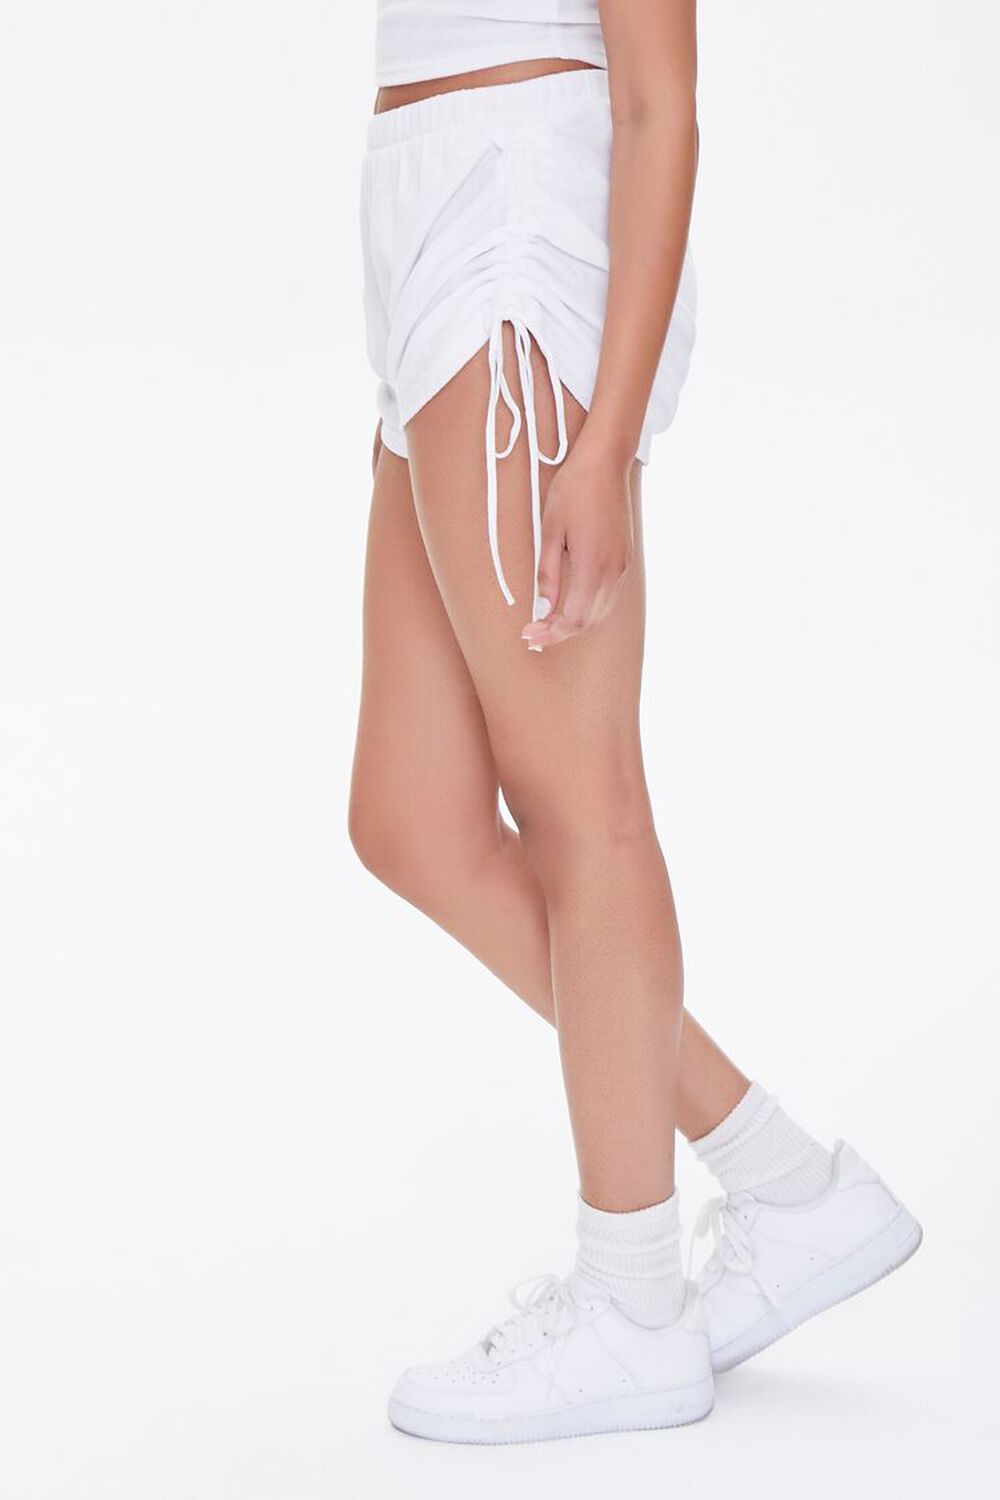 WHITE Ruched Drawstring Shorts, image 3